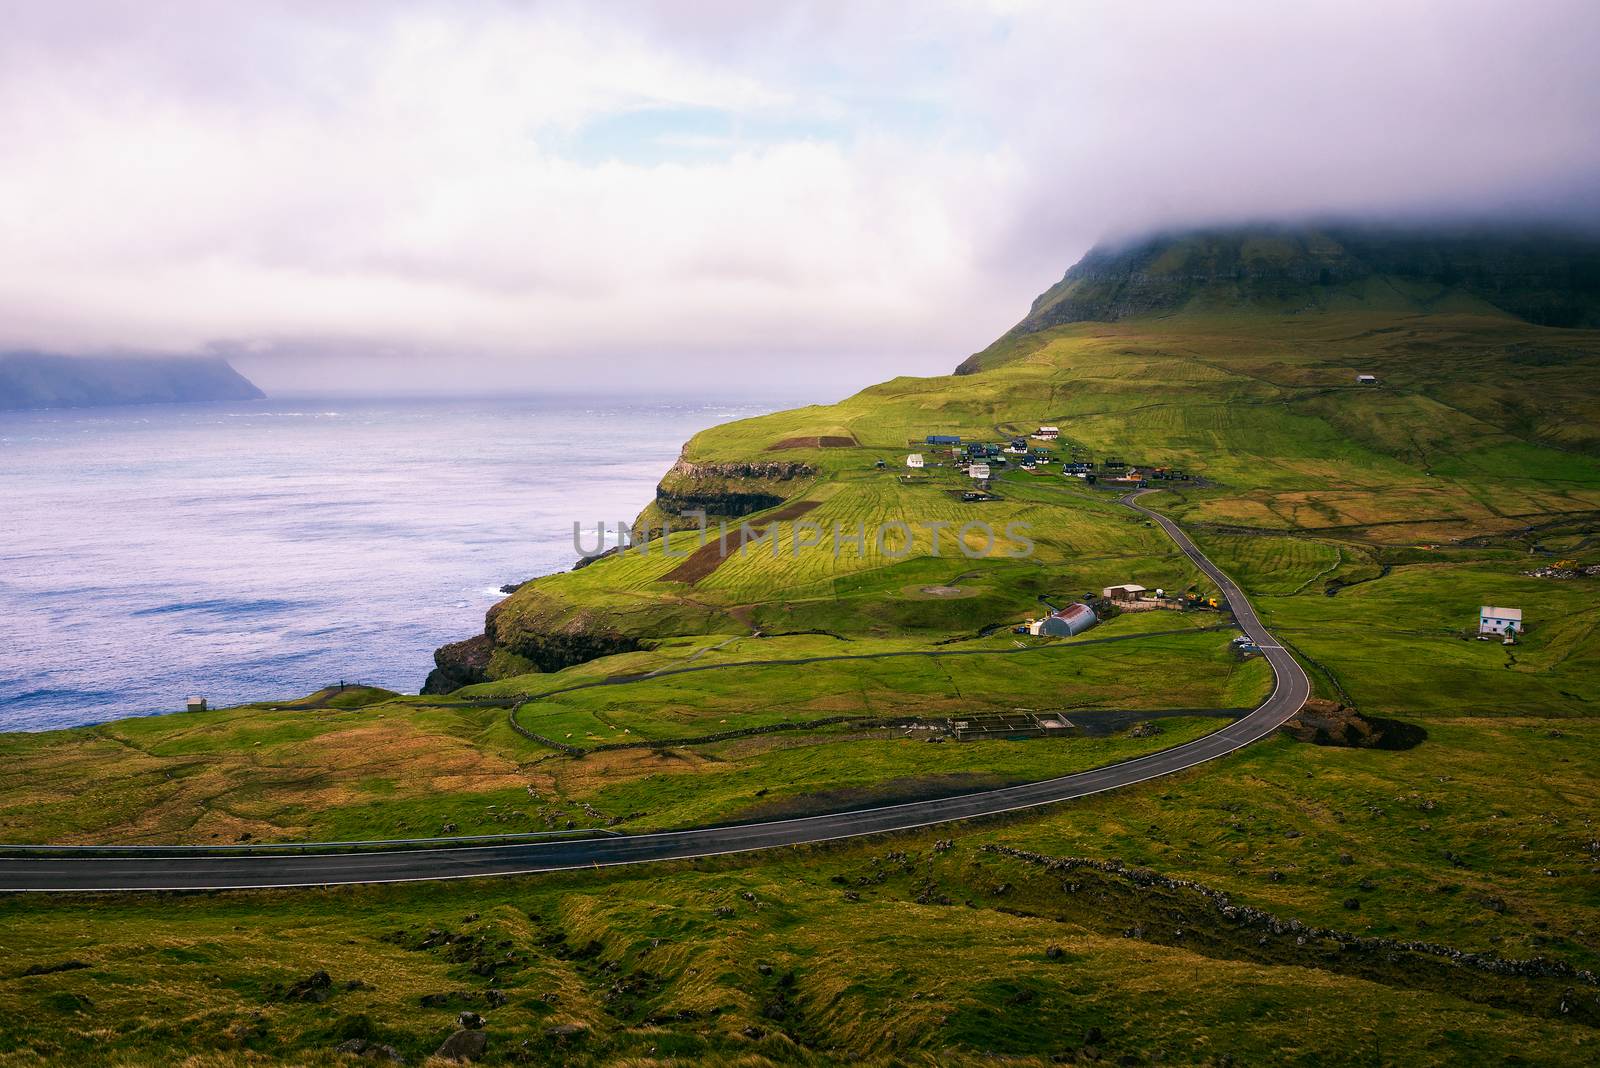 Road going to Gasadalur village in Faroe Islands by nickfox